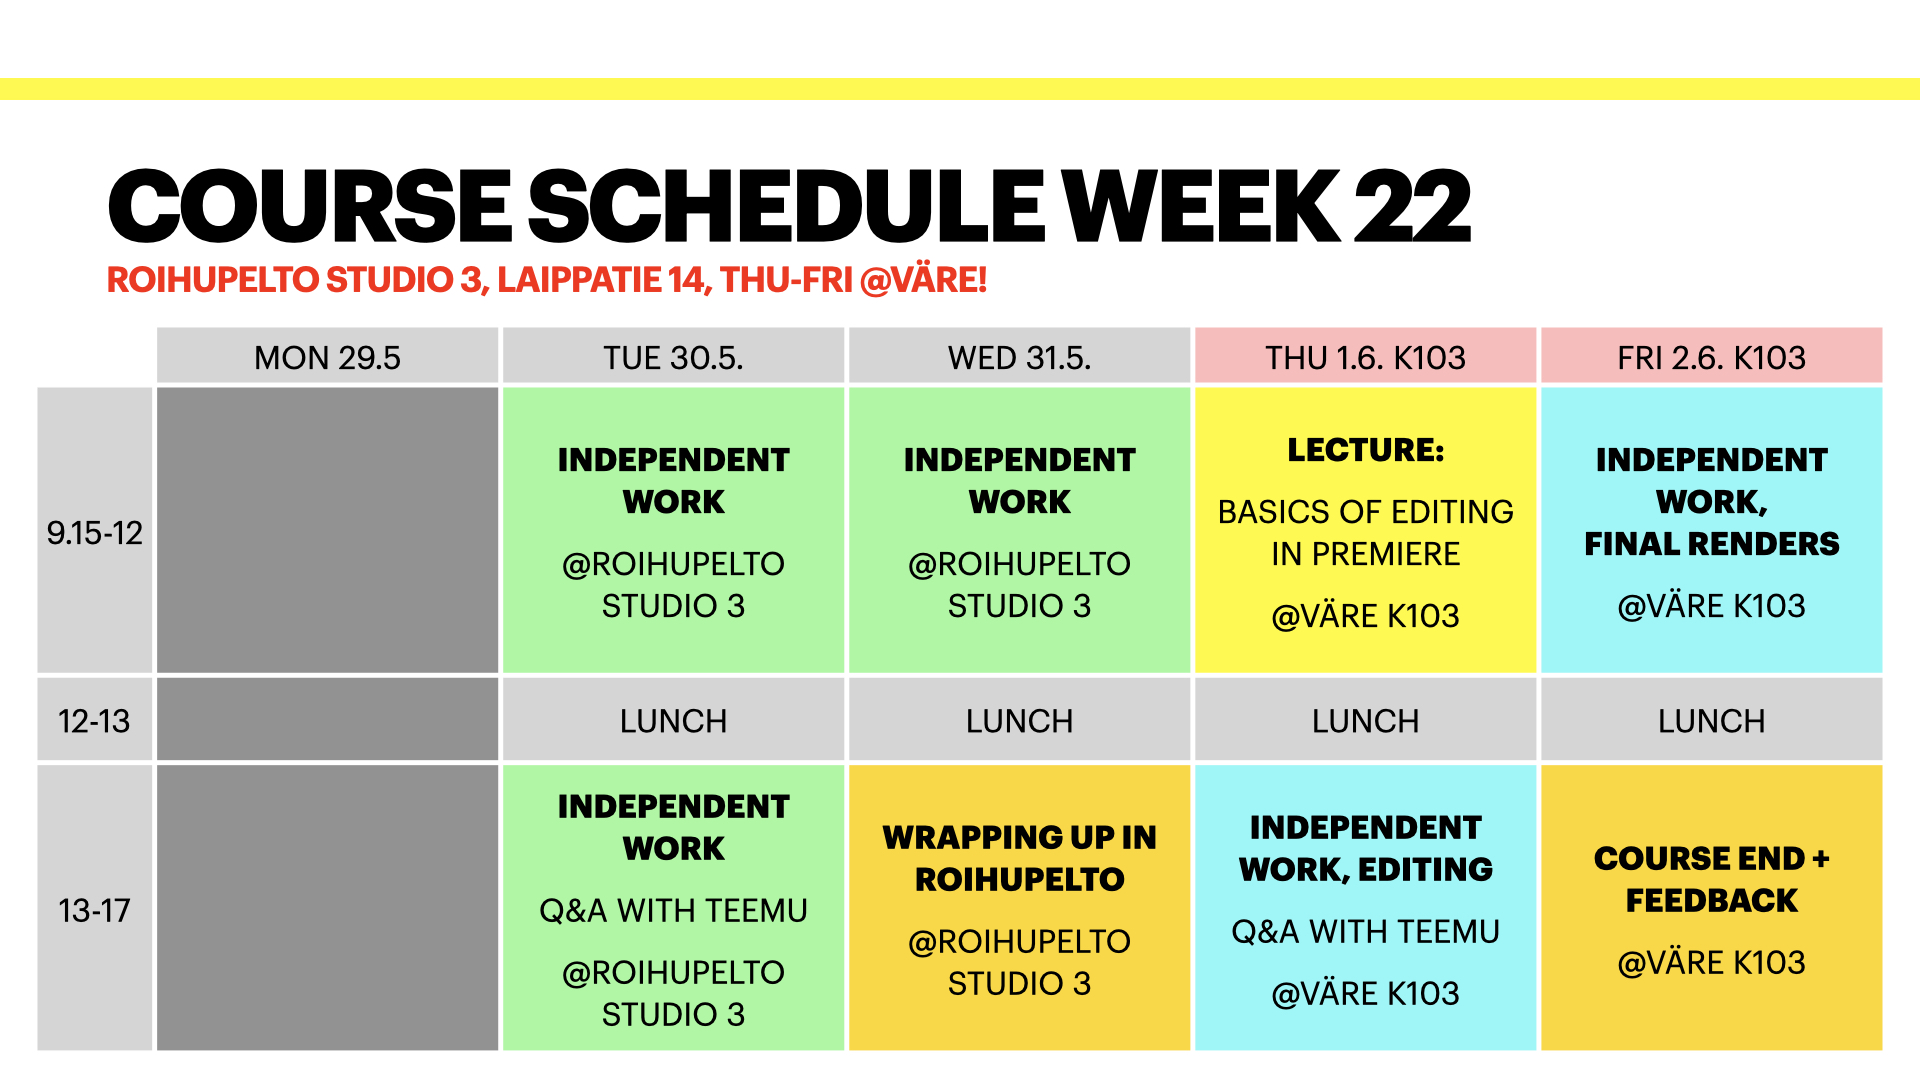 Course schedule week 22